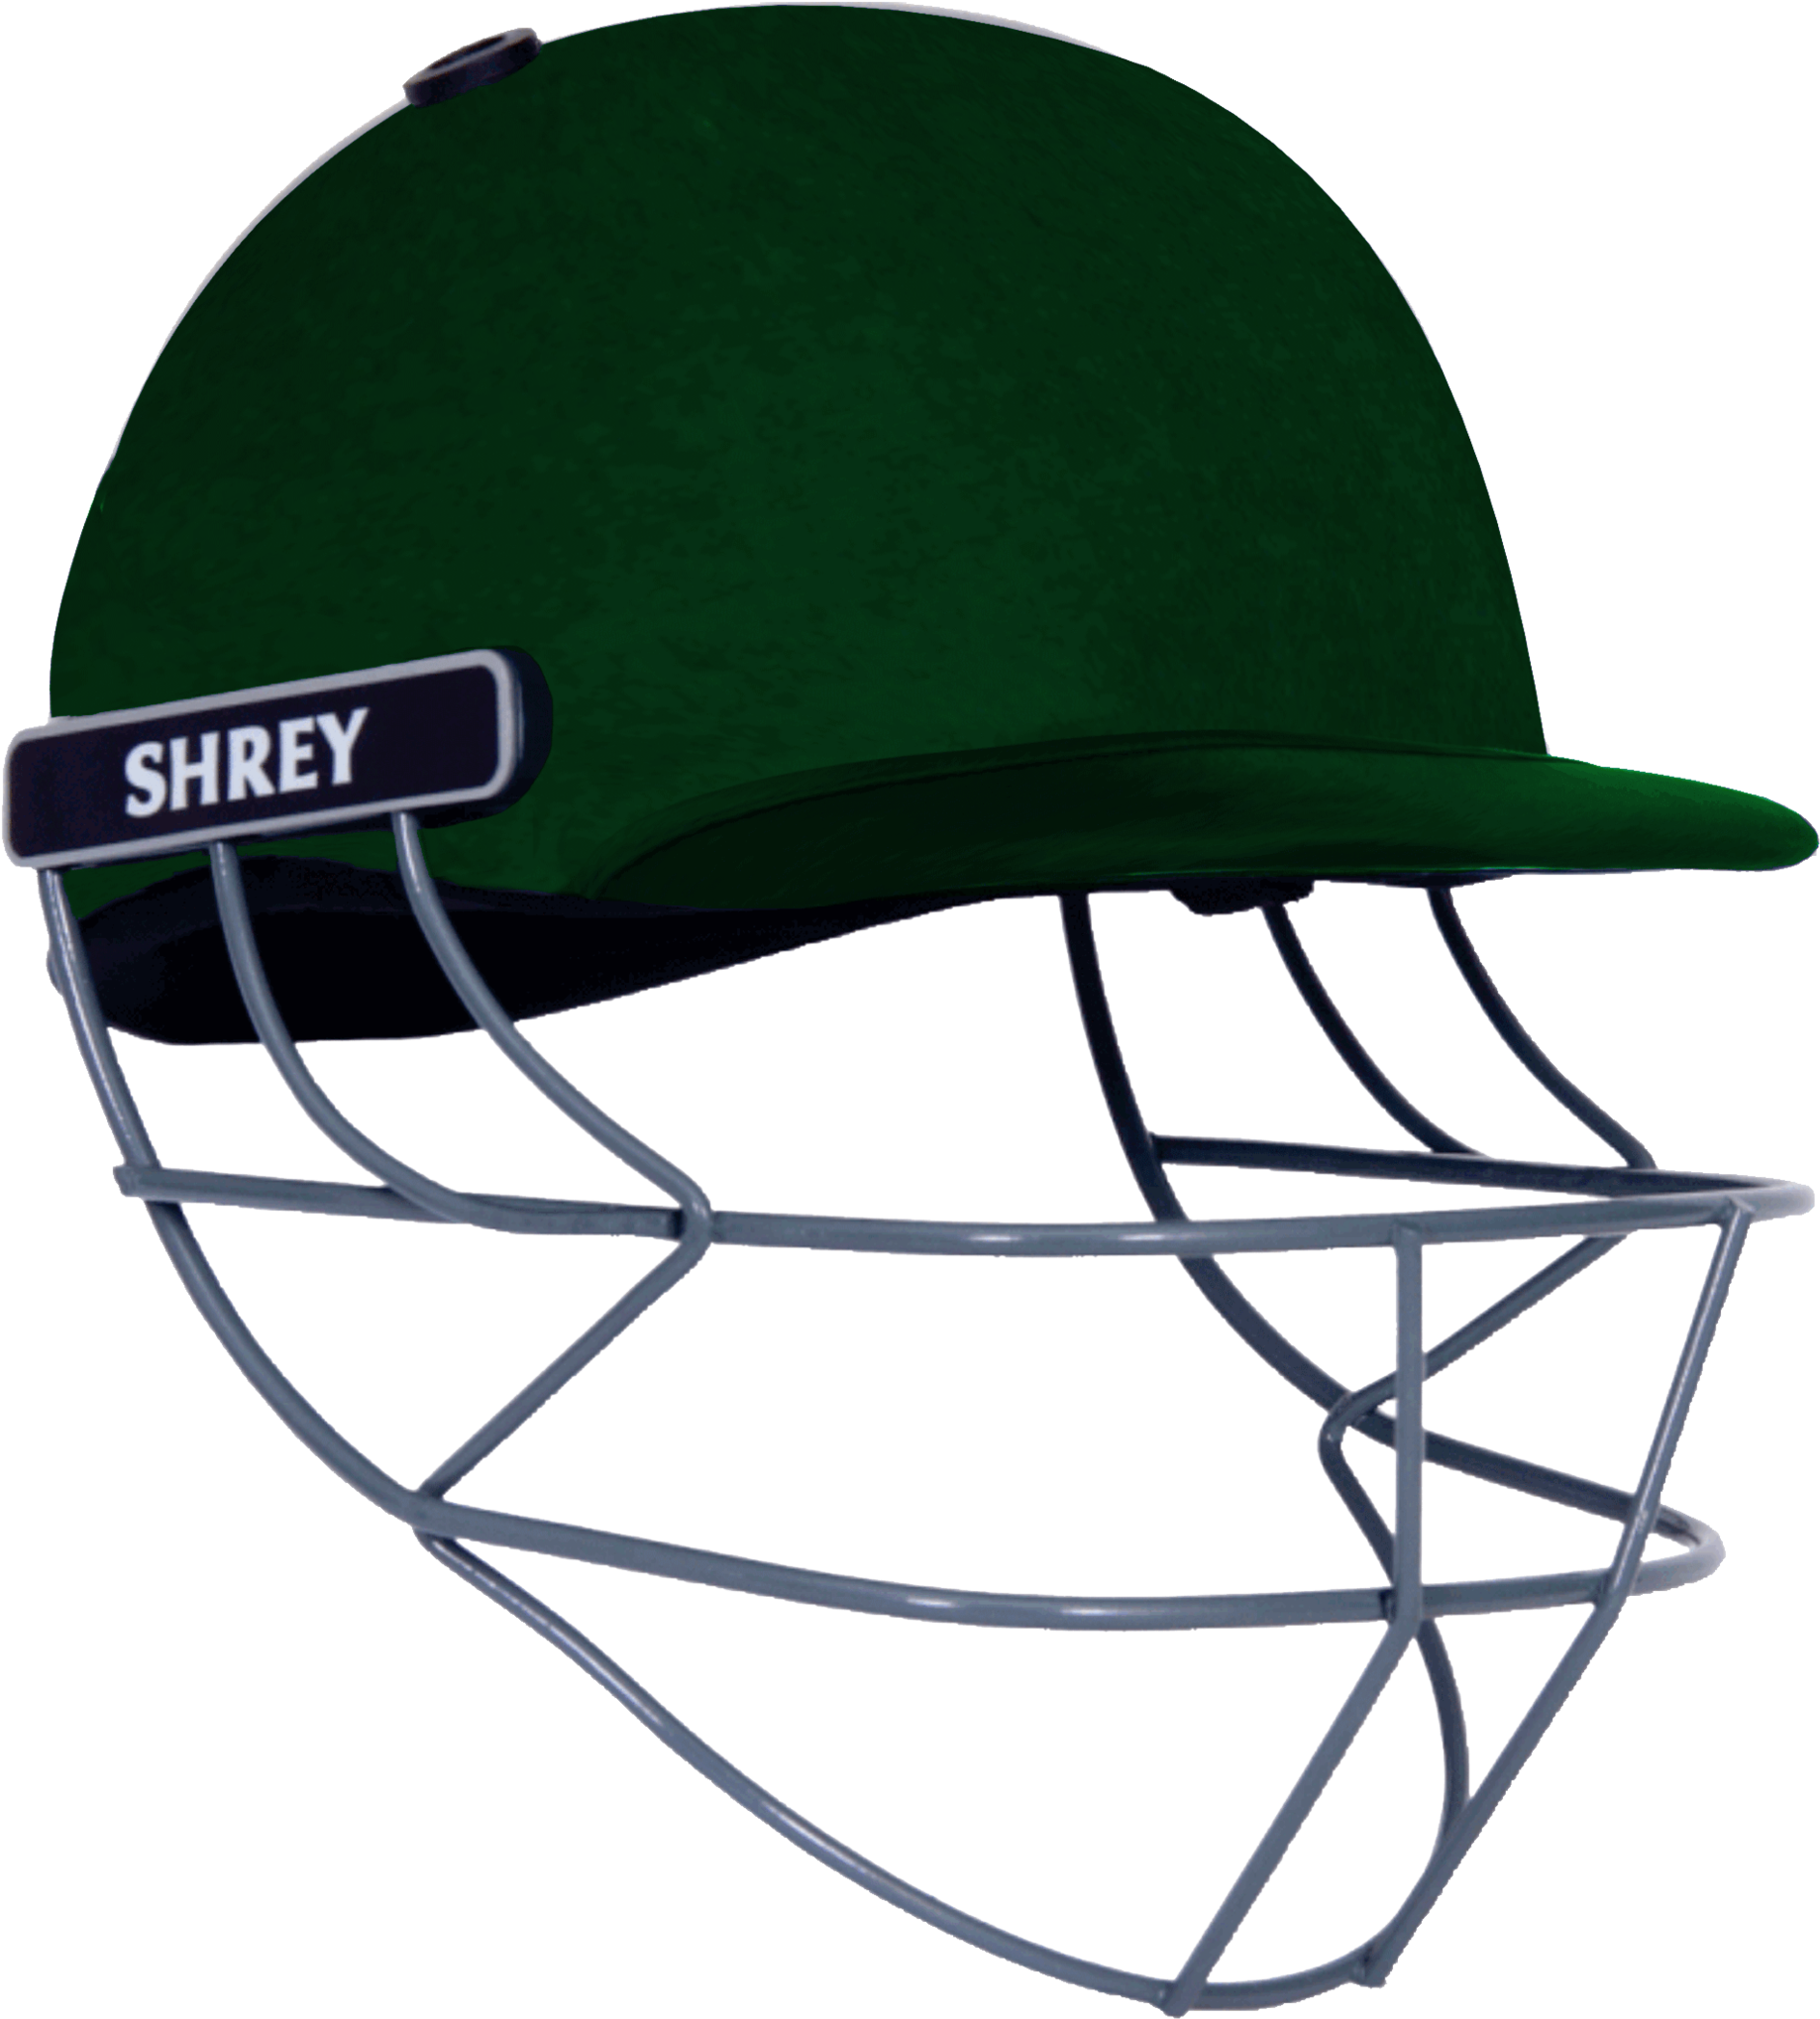 Cricket Helmet Transparent Image